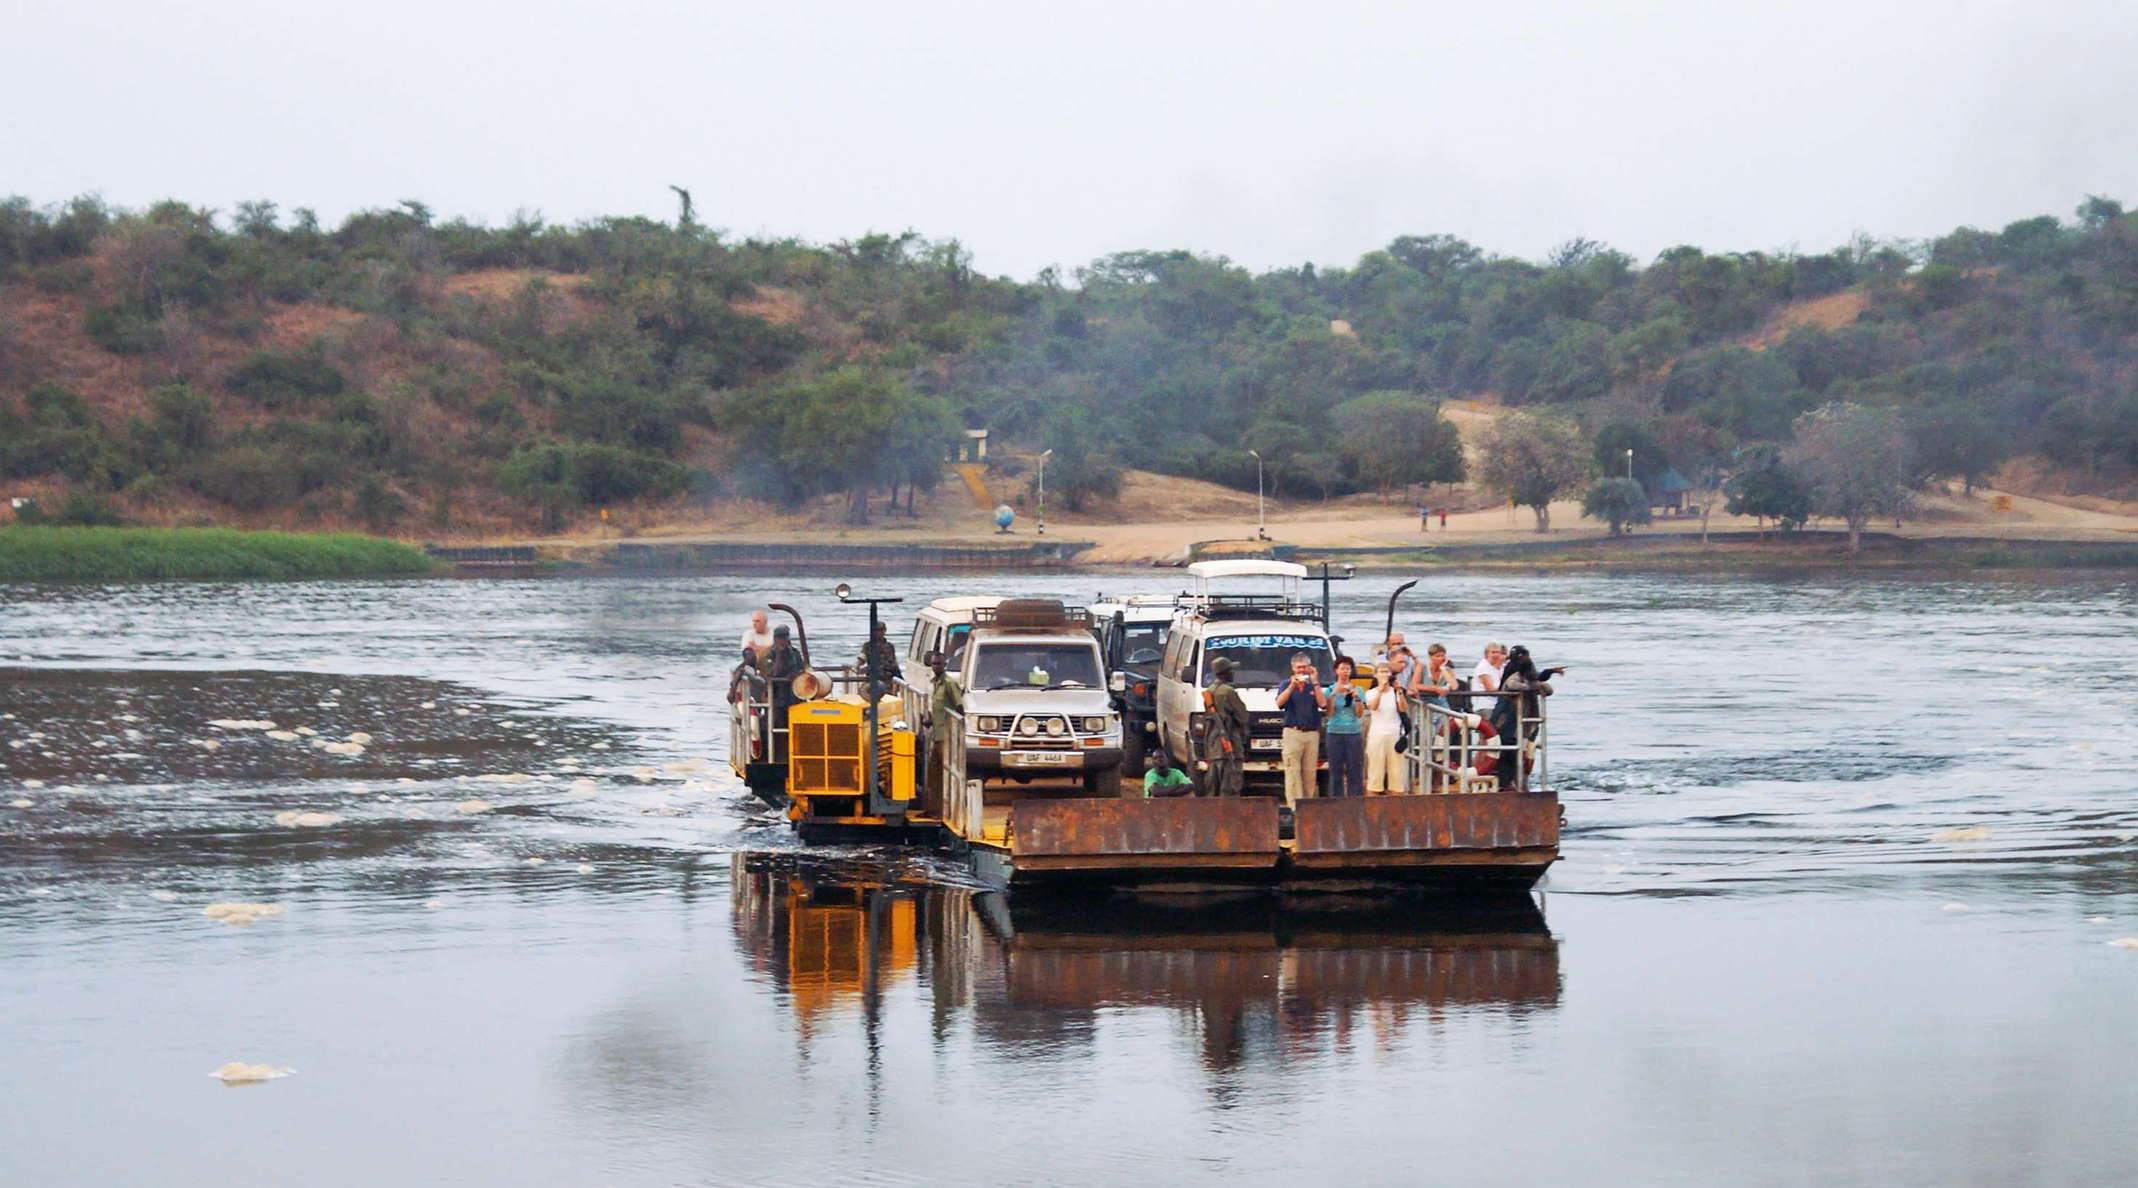 Murchison Falls NP  |  Paraa ferry crossing